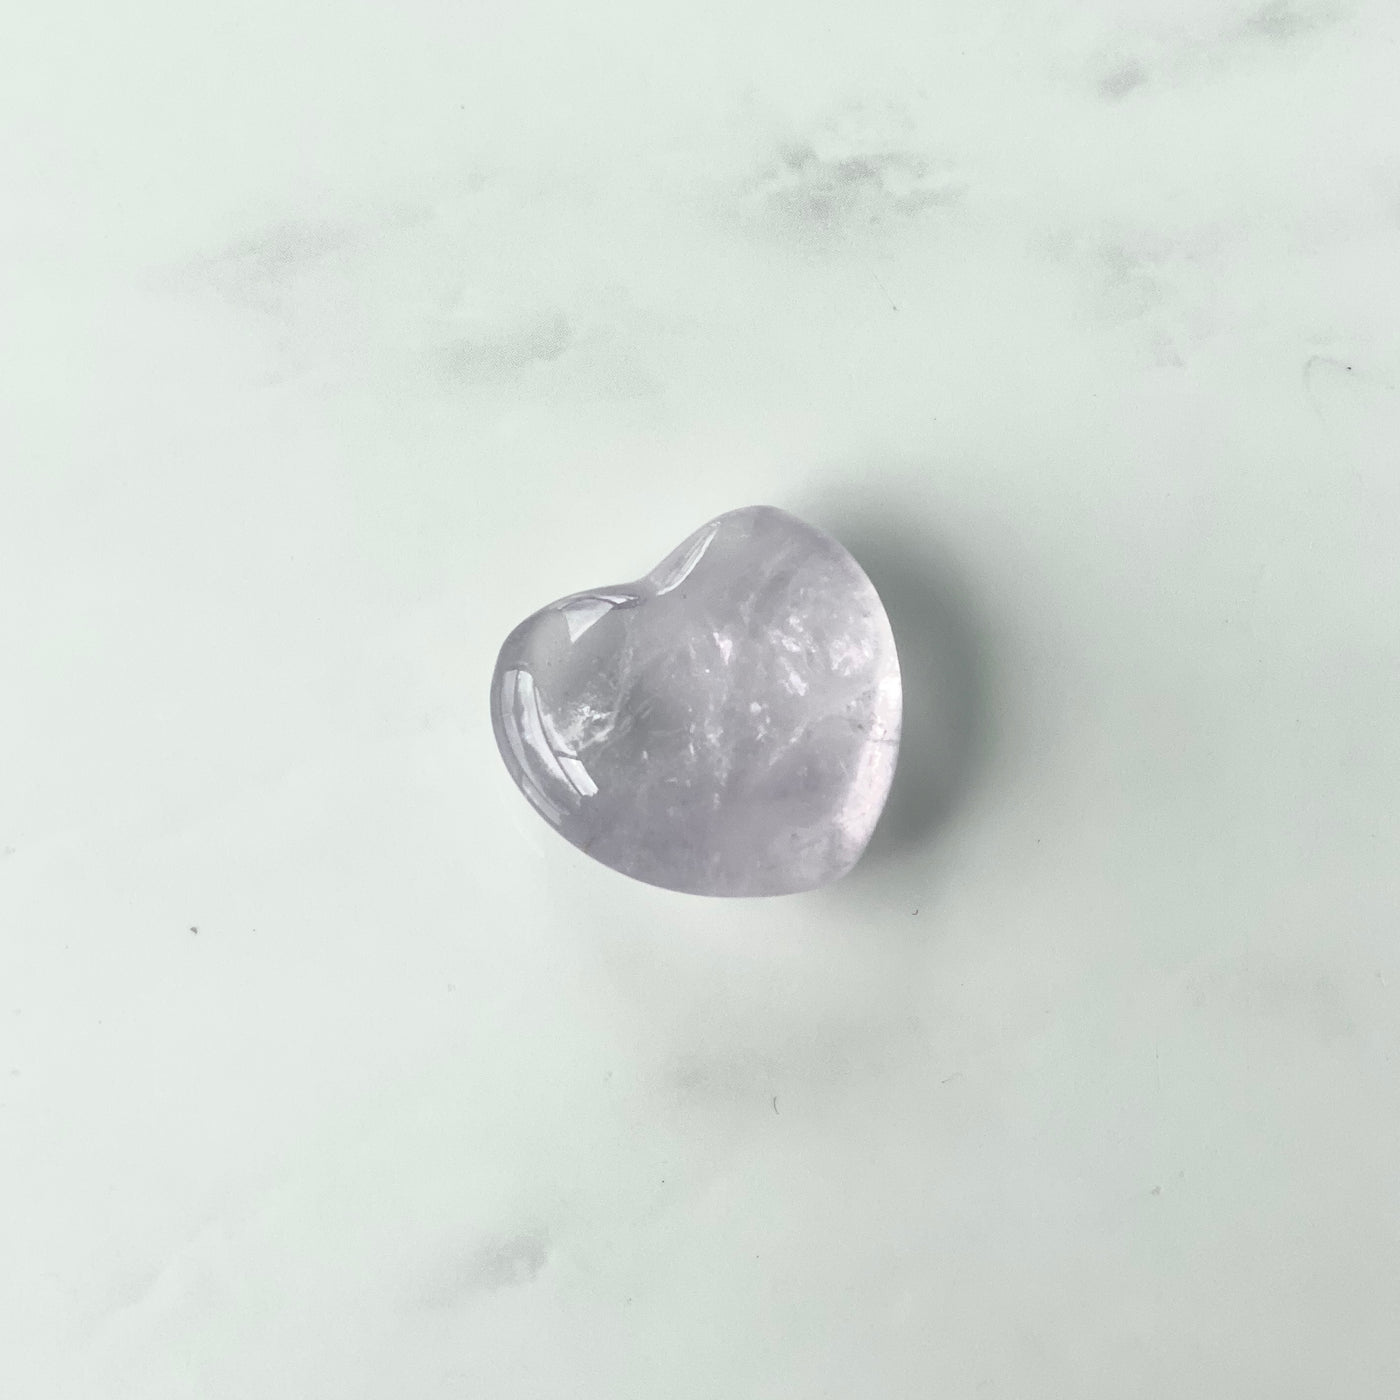 "Magical and Calming: Mini Amethyst Heart Crystal"